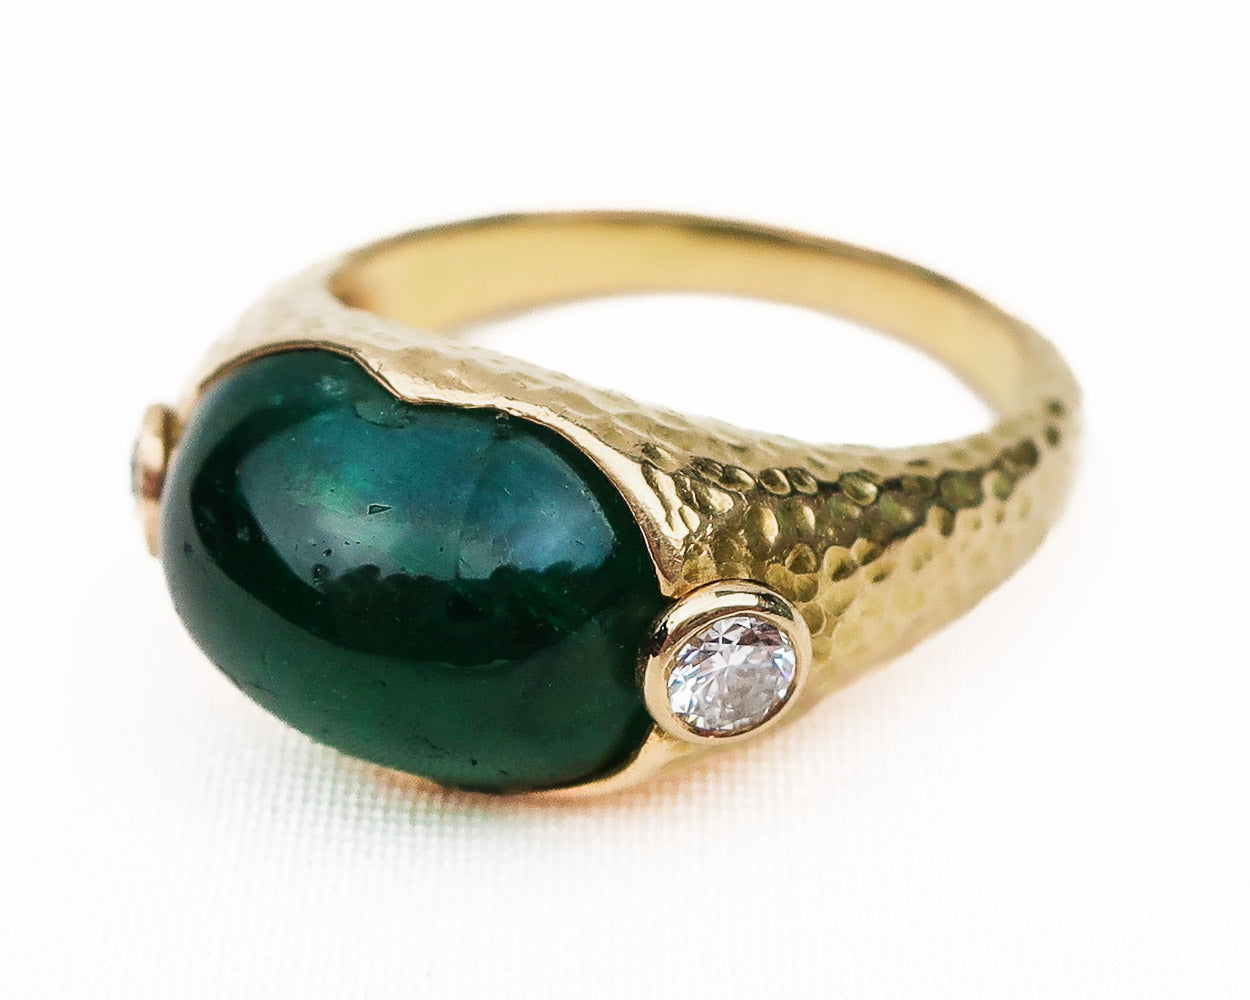 Late-Midcentury French Emerald & Diamond Ring